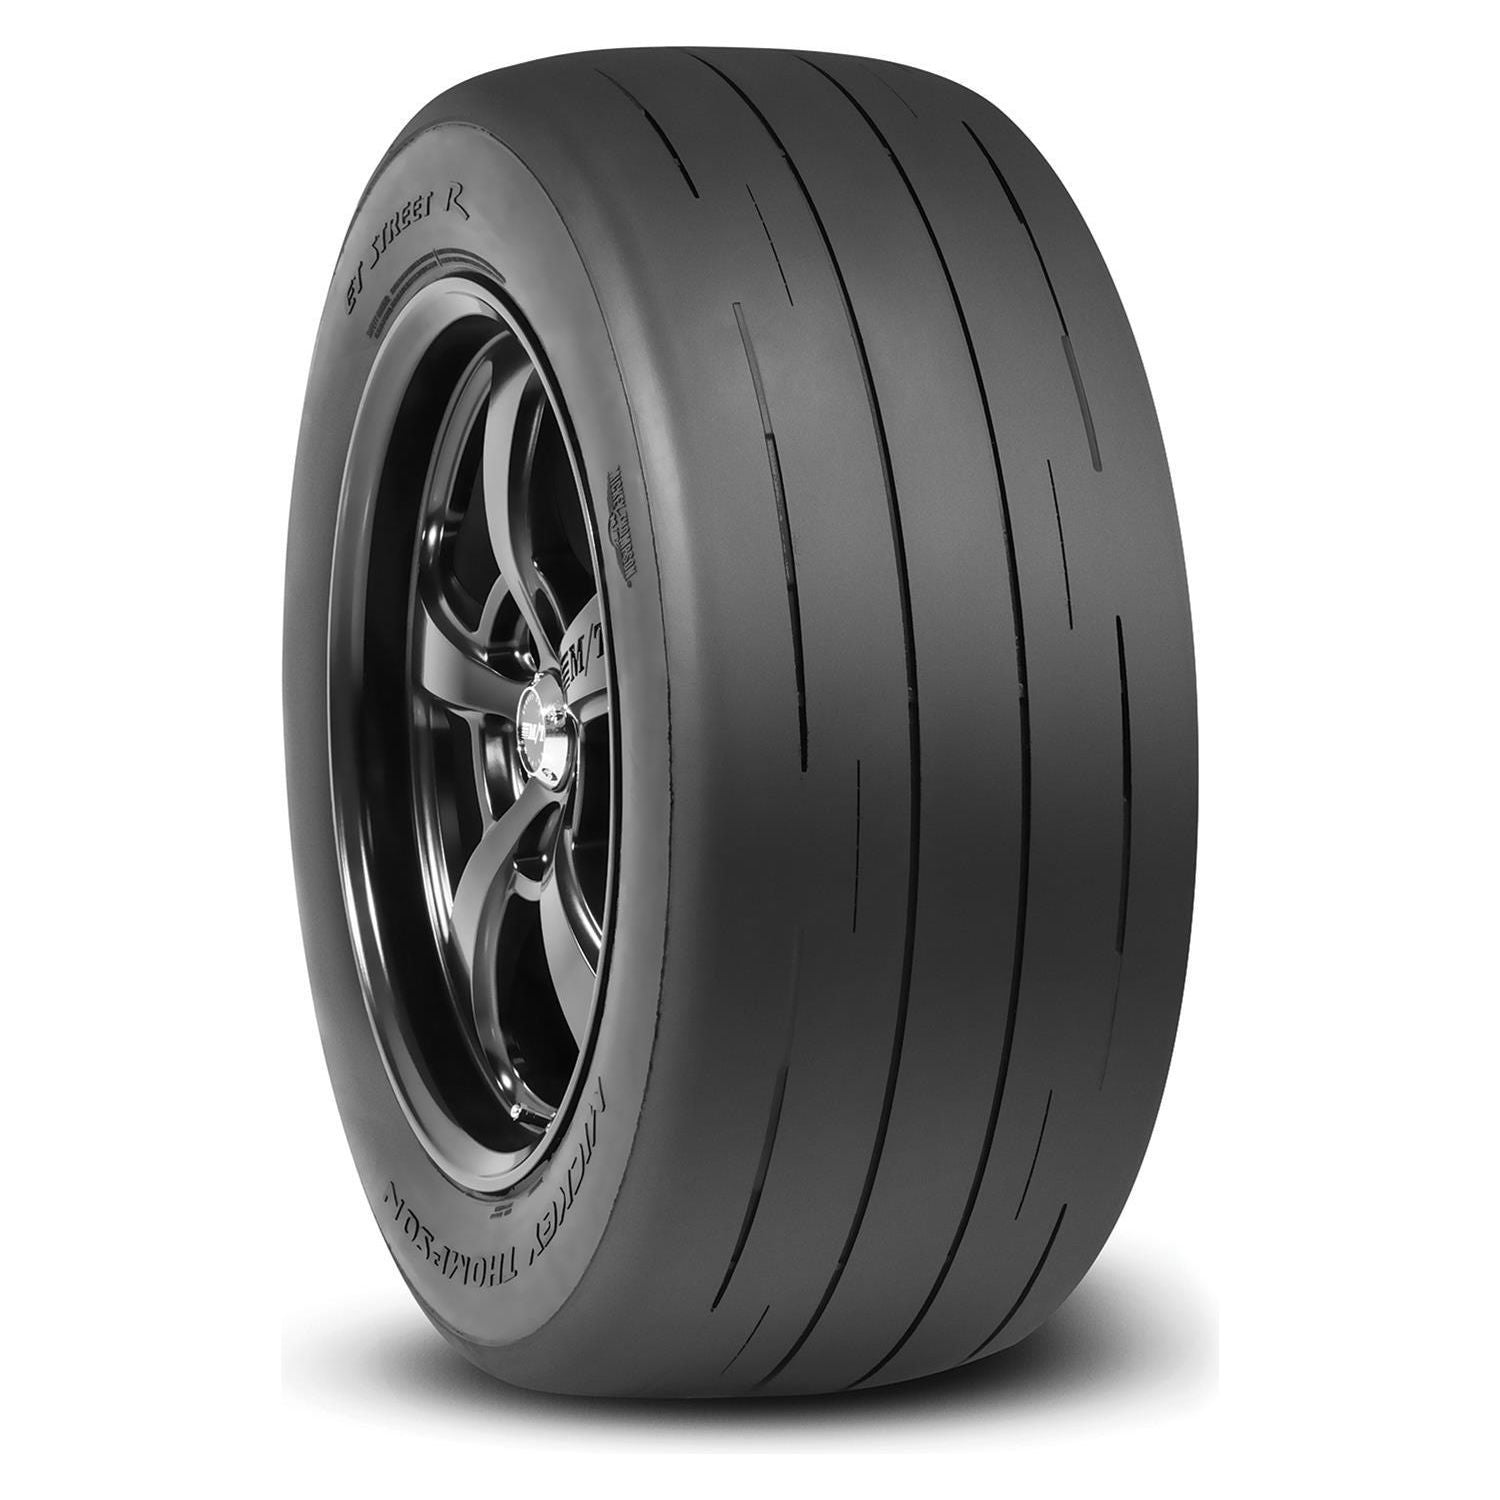 P325/50R15 ET Street R Tire